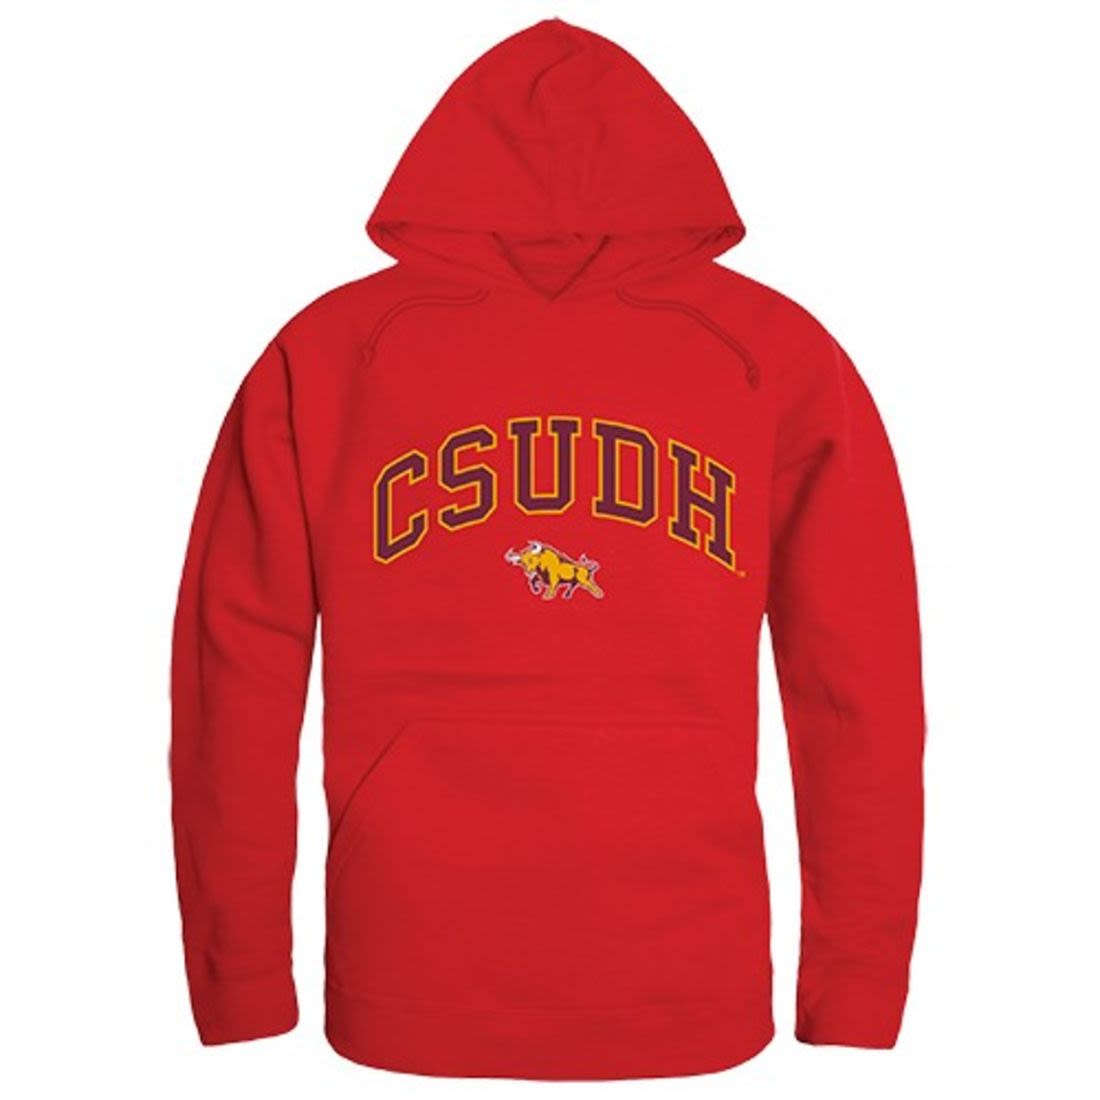 CSUDH California State University Dominguez Hills Toros Campus Hoodie Sweatshirt Red-Campus-Wardrobe